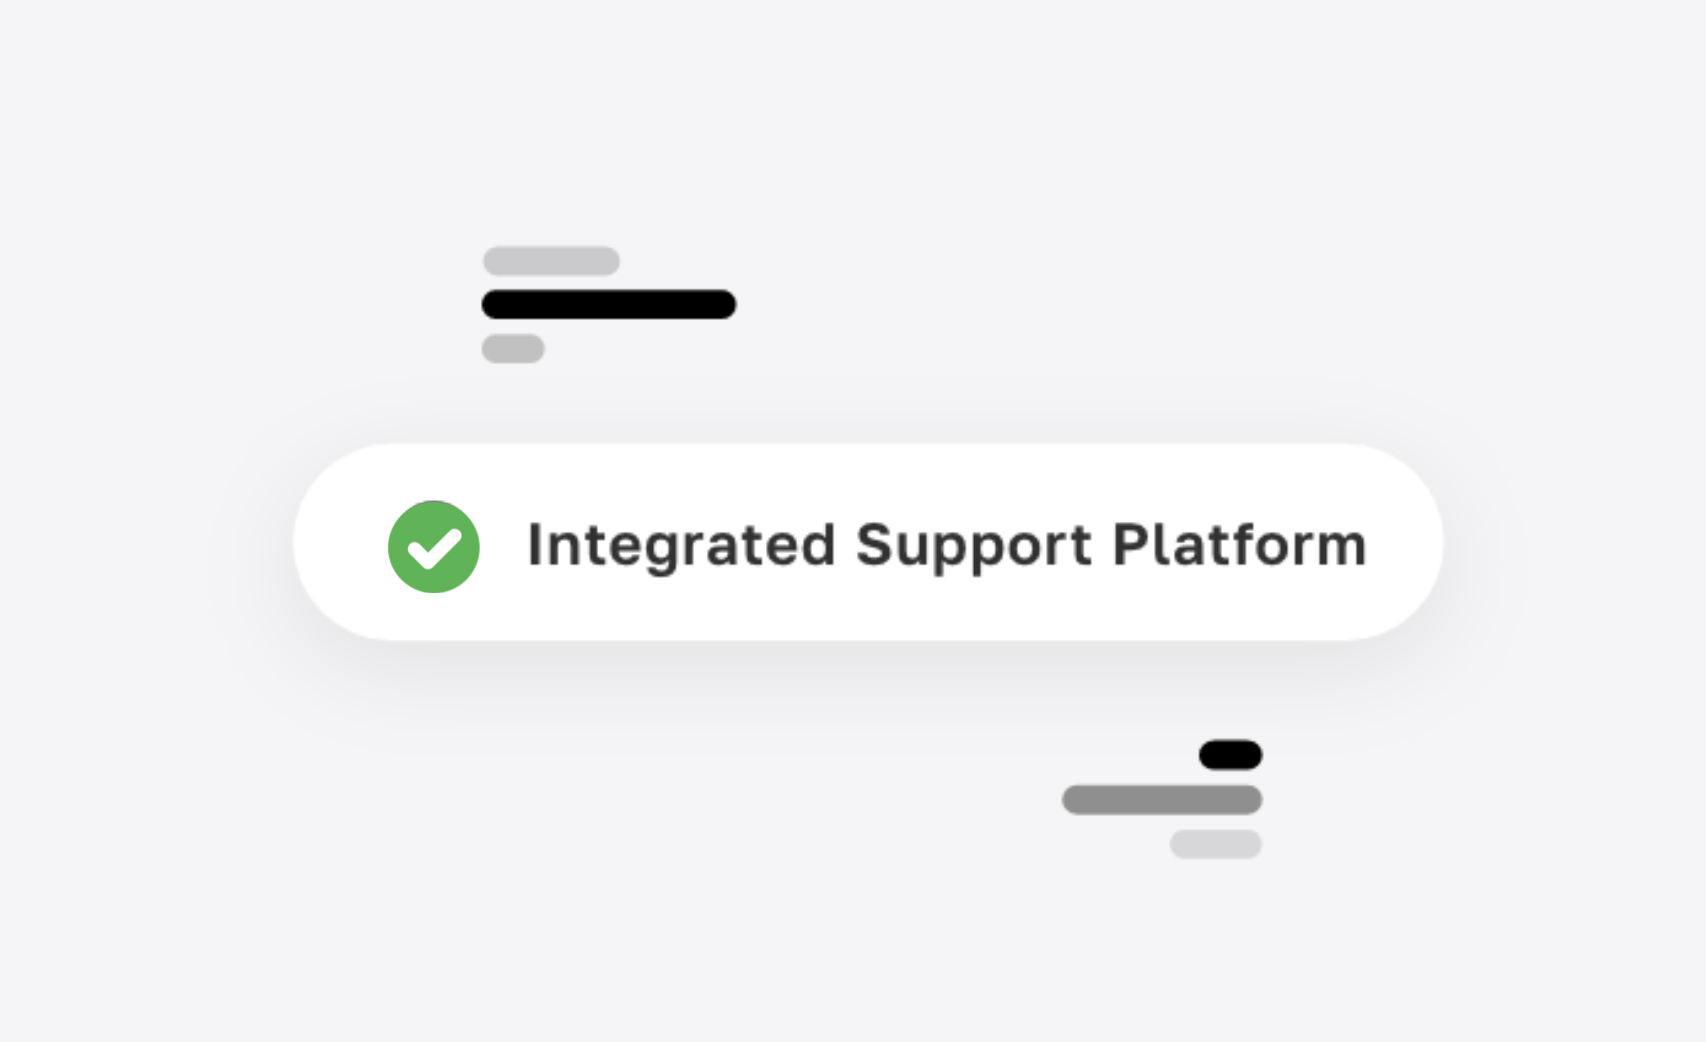 Support Platform